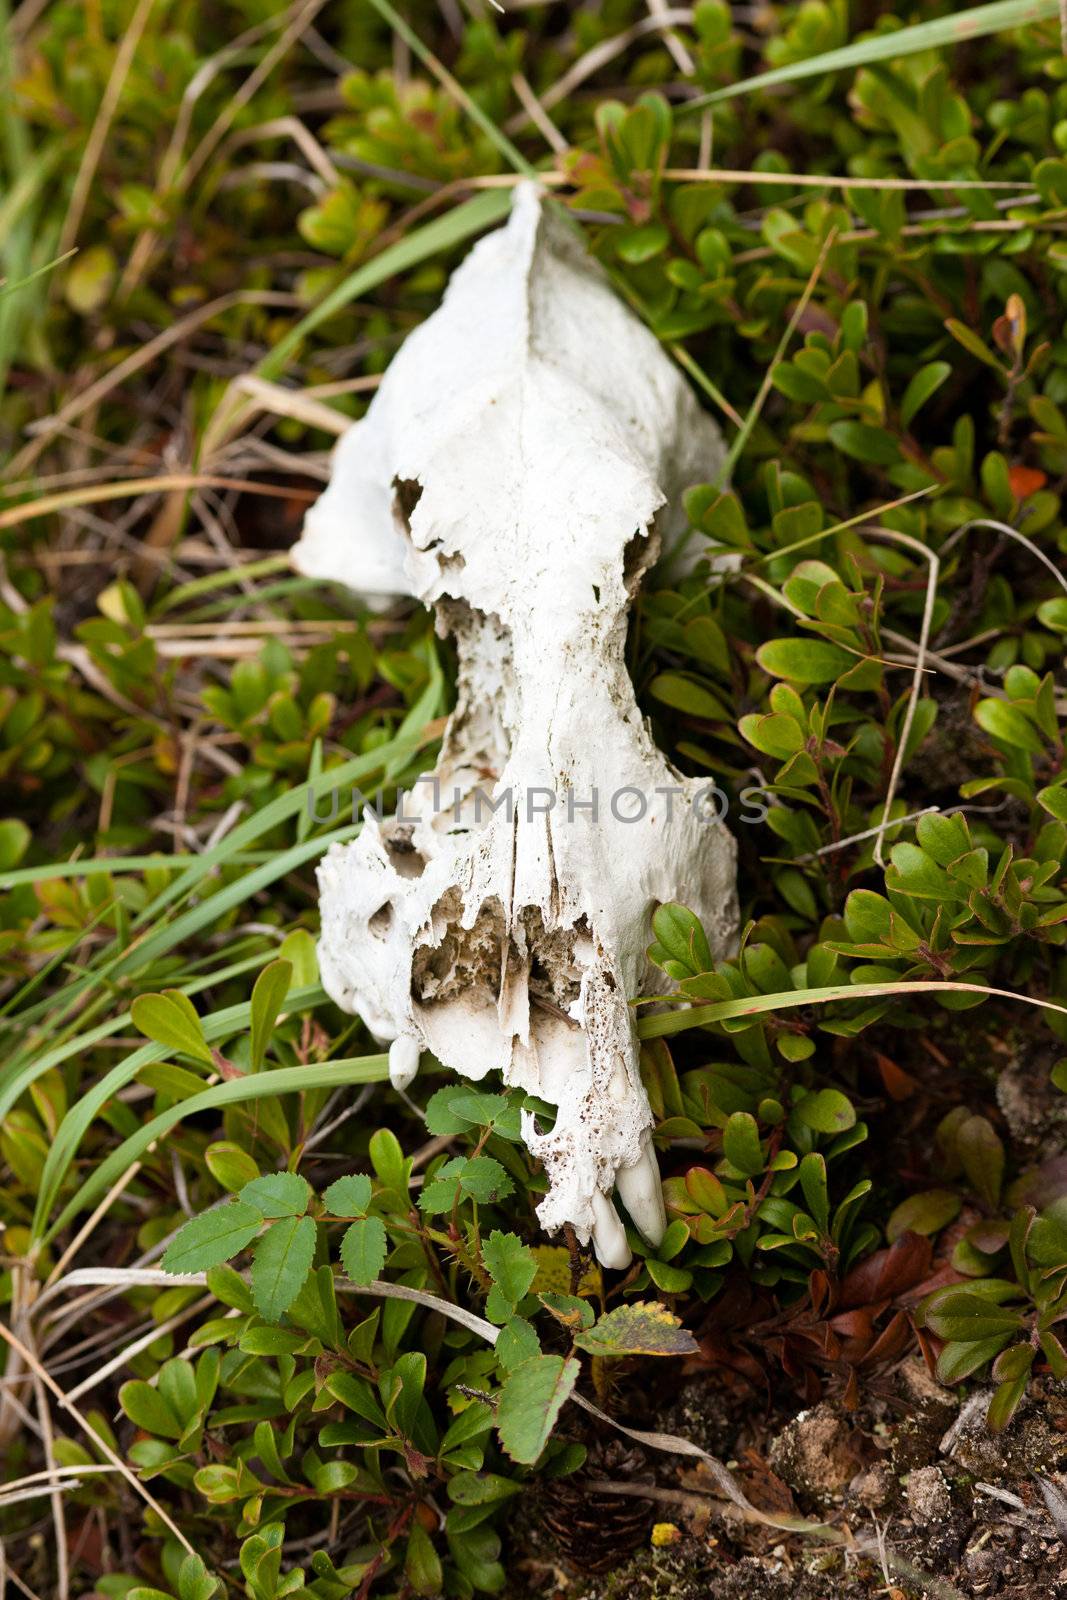 Pale Skull of Dead Animal on Forest Floor by PiLens